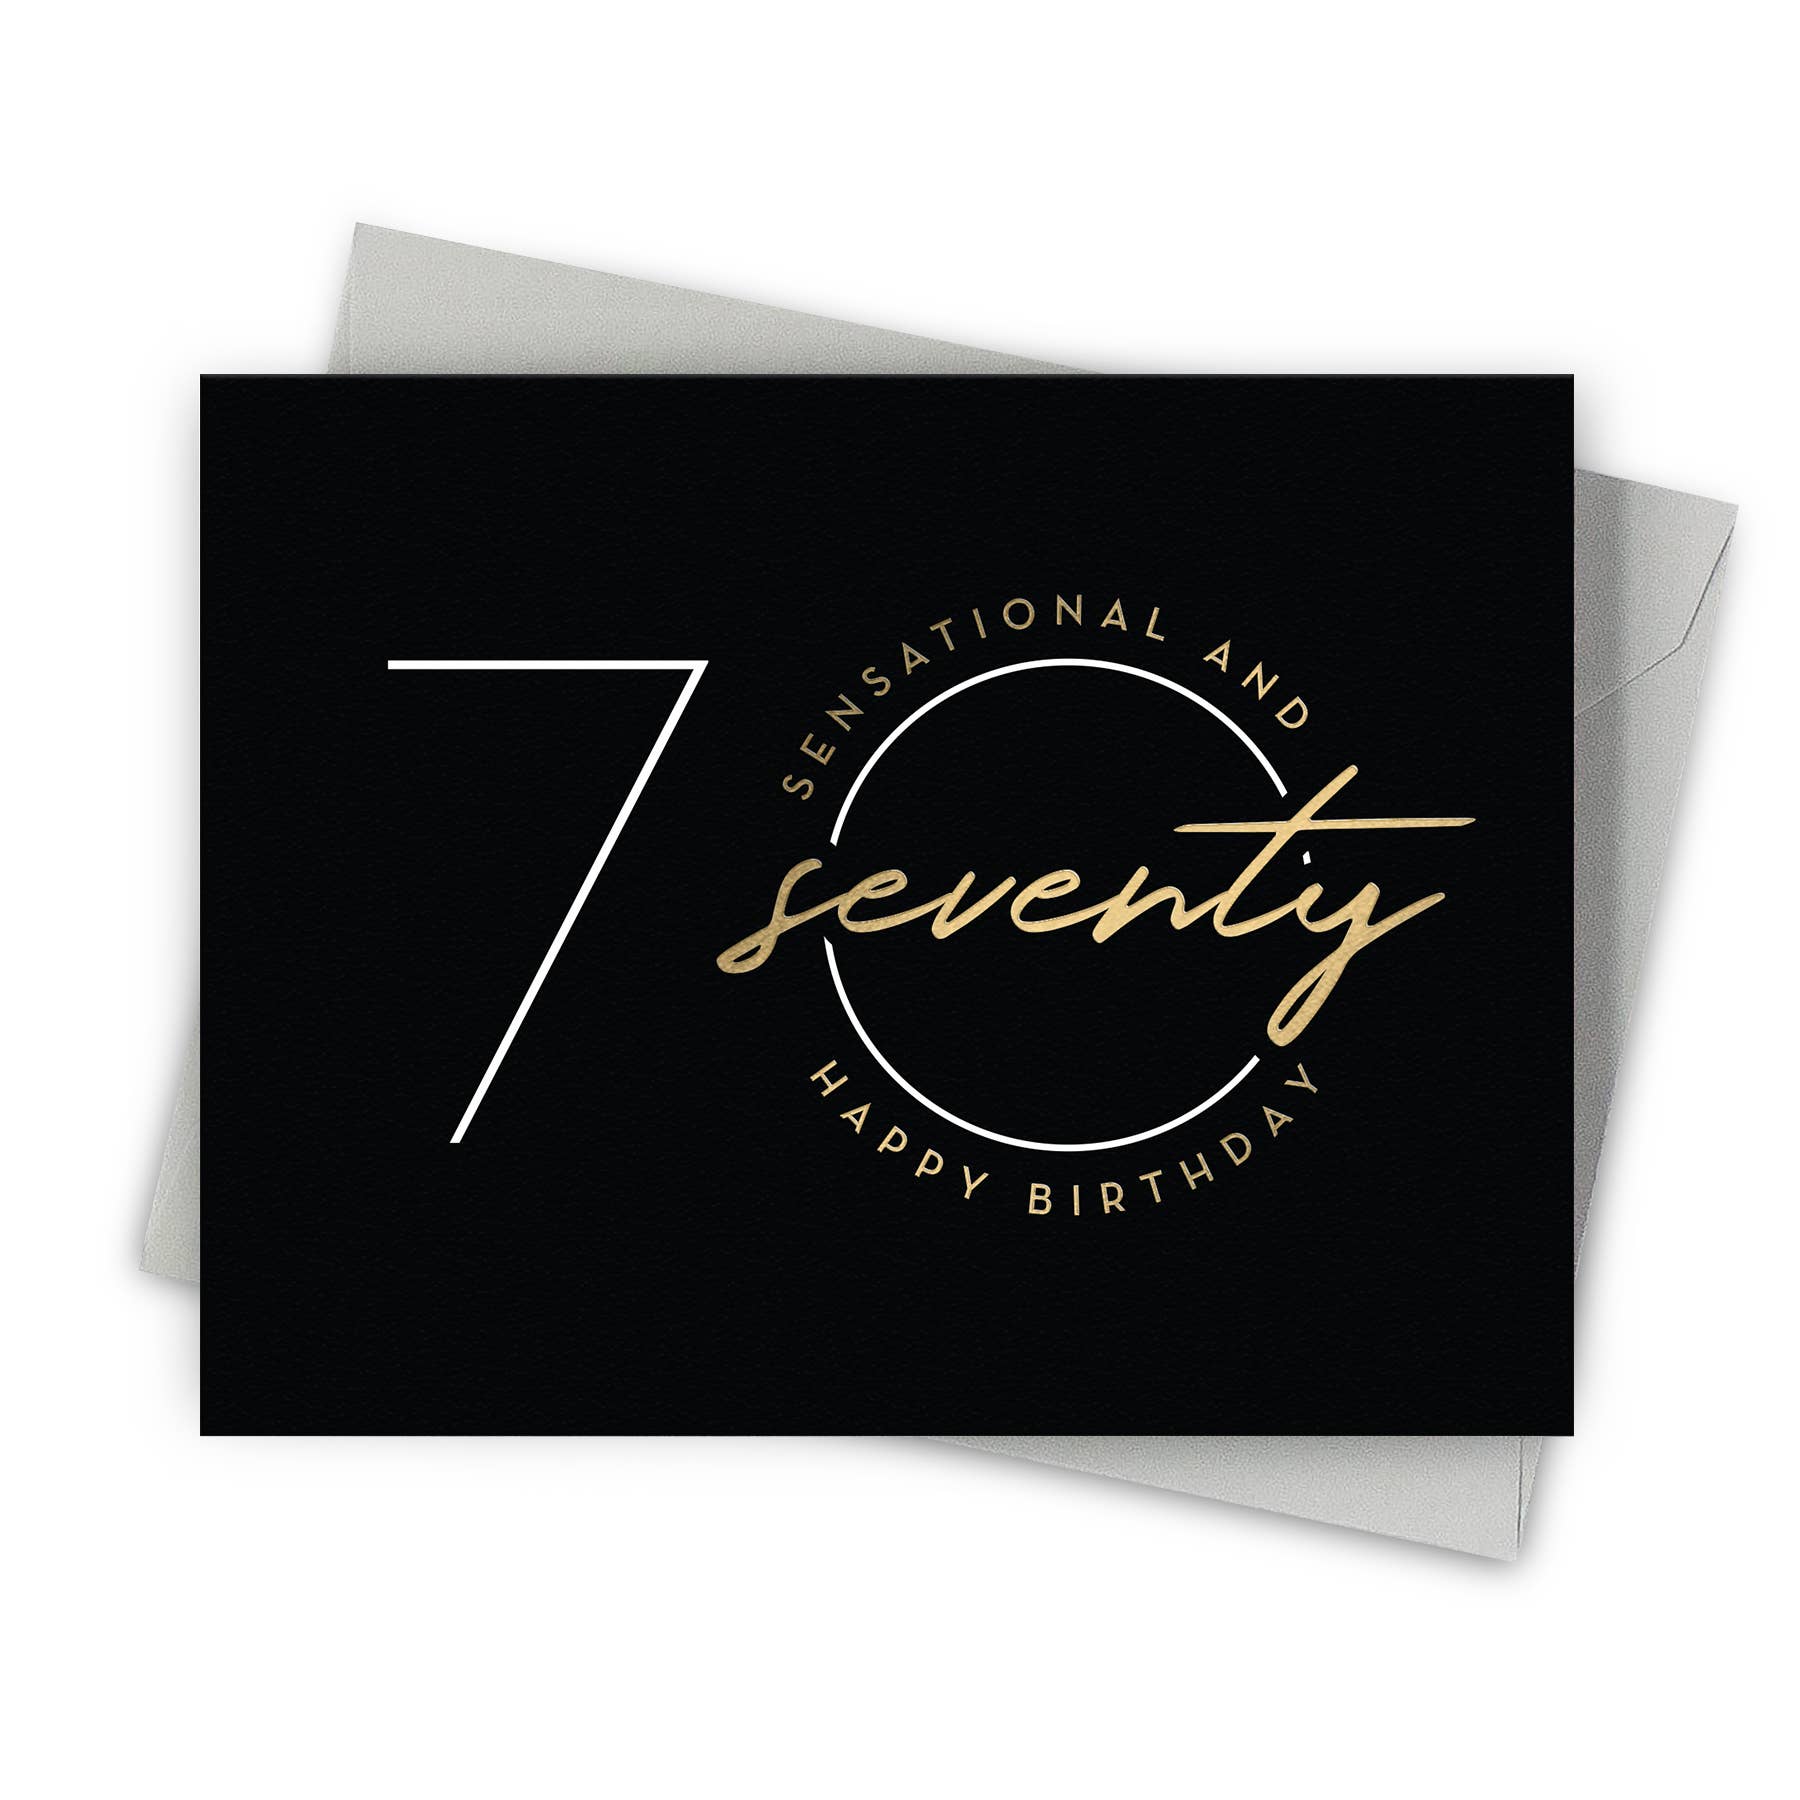 Sensational Seventy – Award Winning 70th Birthday Card